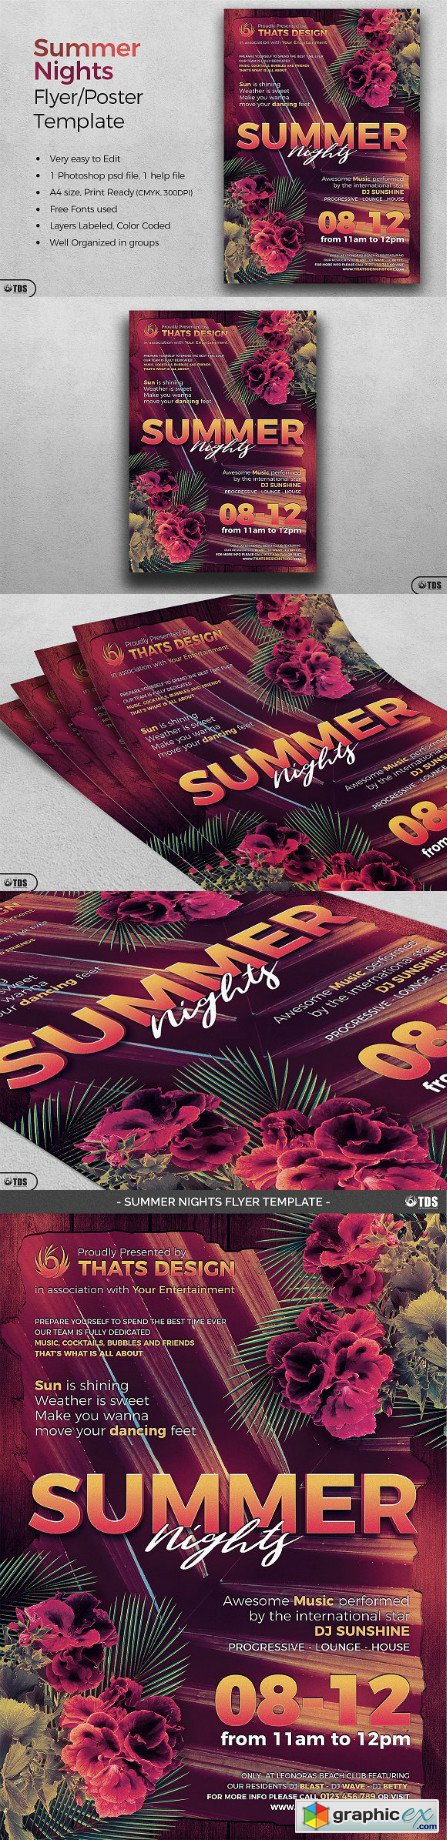 Summer Nights Flyer Template 1469520